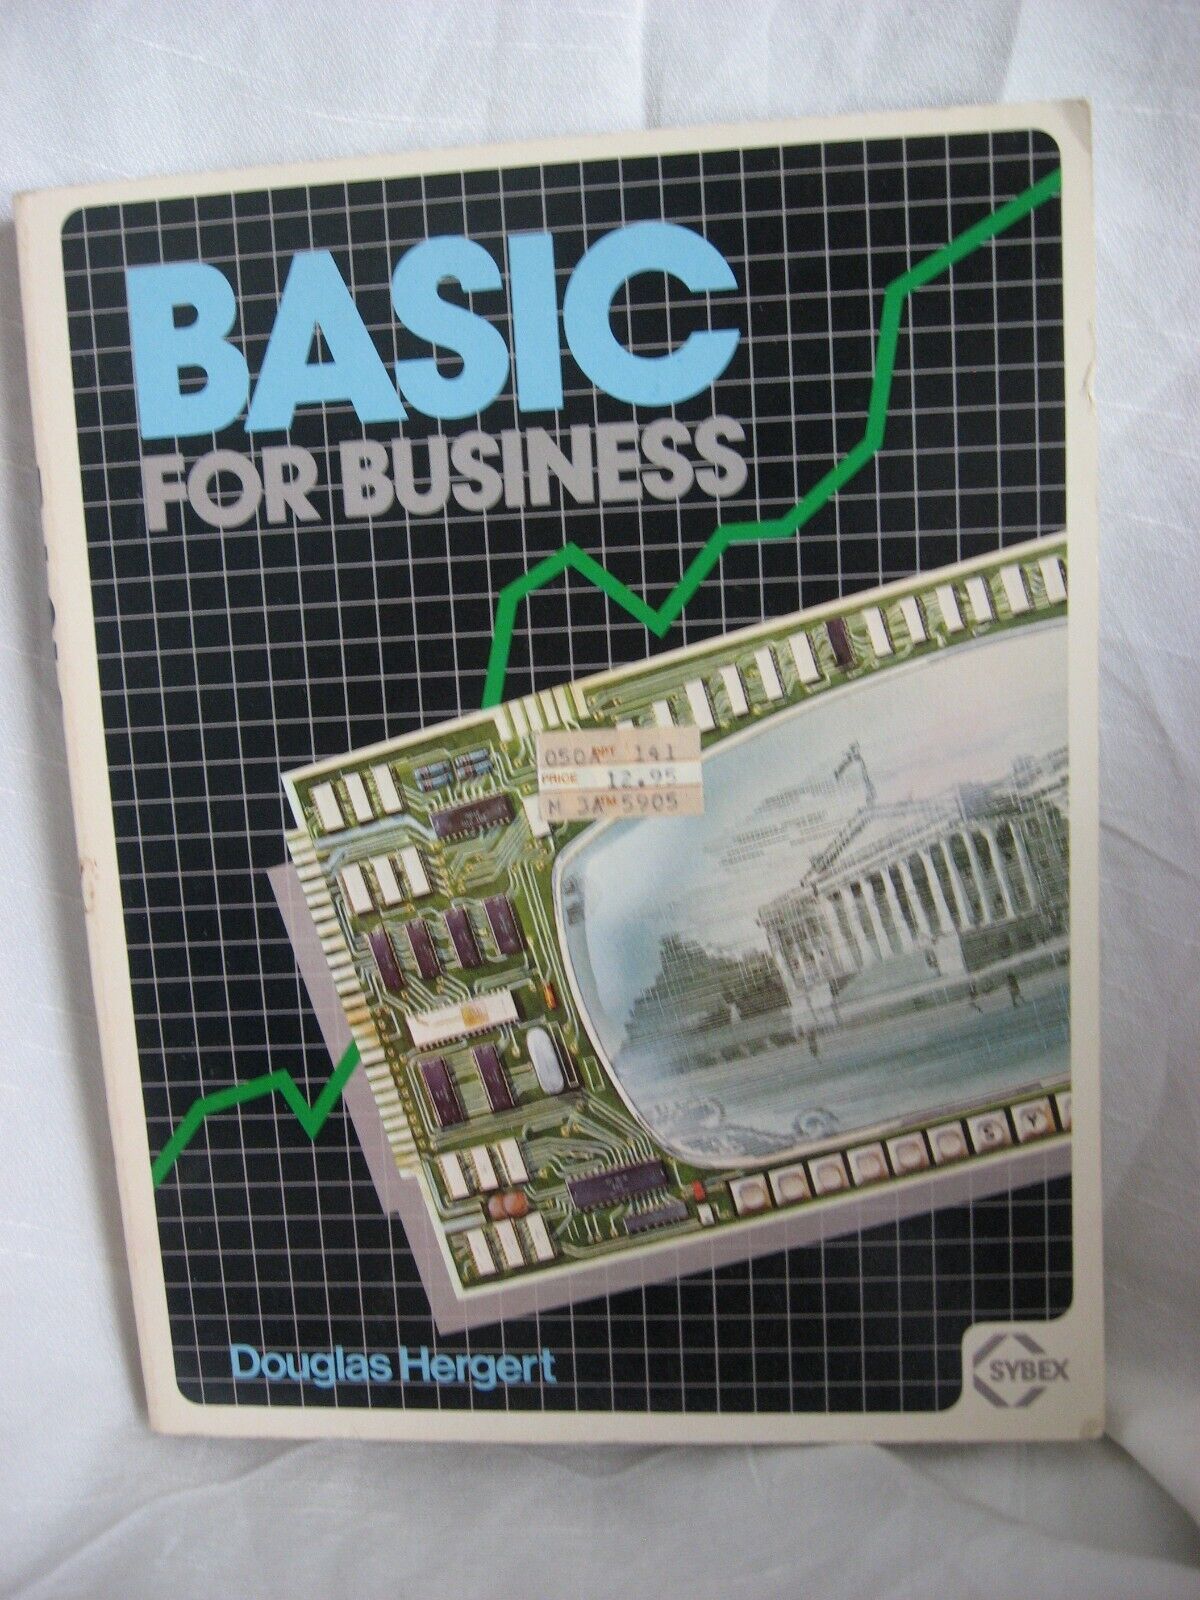 Vtg Computer Book BASIC FOR BUSINESS Douglas Hergert 1982 Sybex COBOL FORTRAN